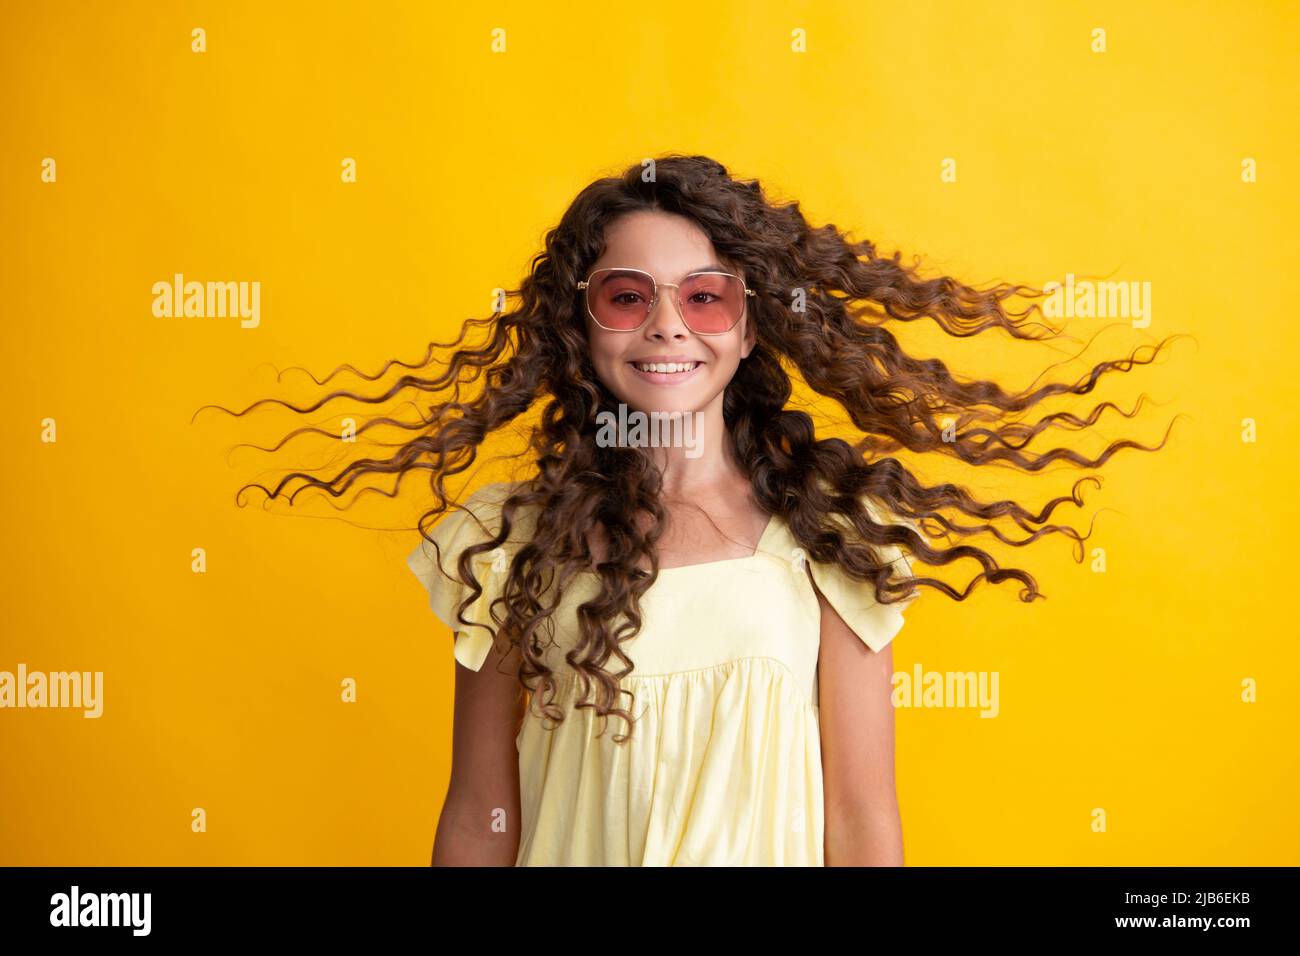 Teenager-Porträt mit verrückten Bewegung Haare. Junge Teenager-Kind mit fließenden Haaren. Brünette teen Mädchen flatternde Haare in Bewegung, isoliert auf gelb Stockfoto